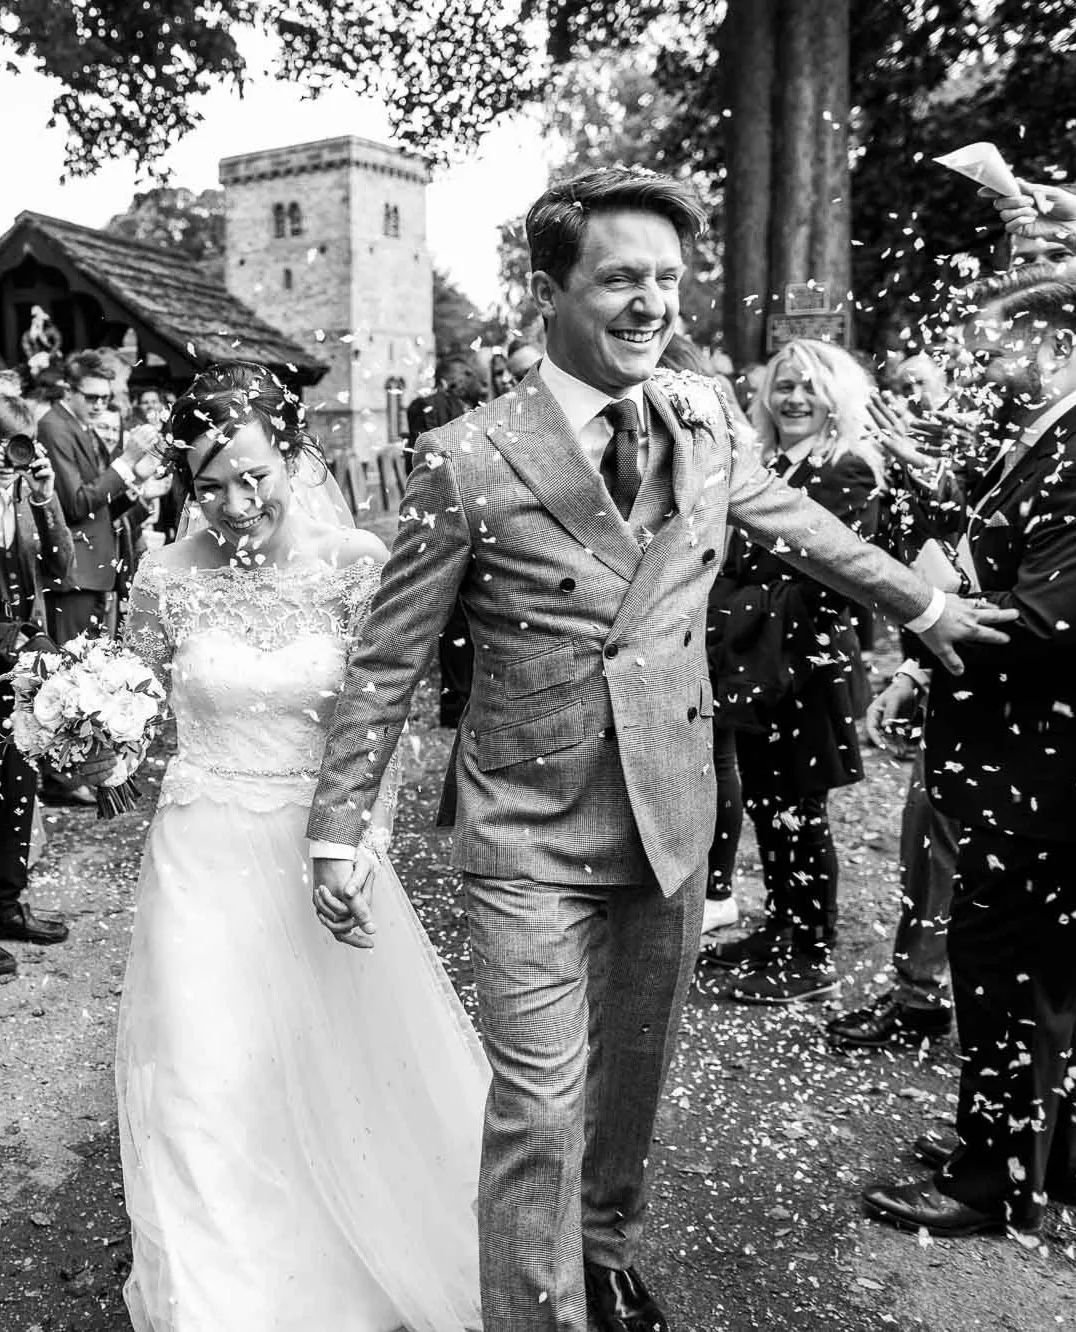 The confetti run.

Lucy + Jake

#middletonlodgewedding #elegantwedding
#blackandwhitewedding
#candidweddingphotography
#northyorkshireweddingphotographer